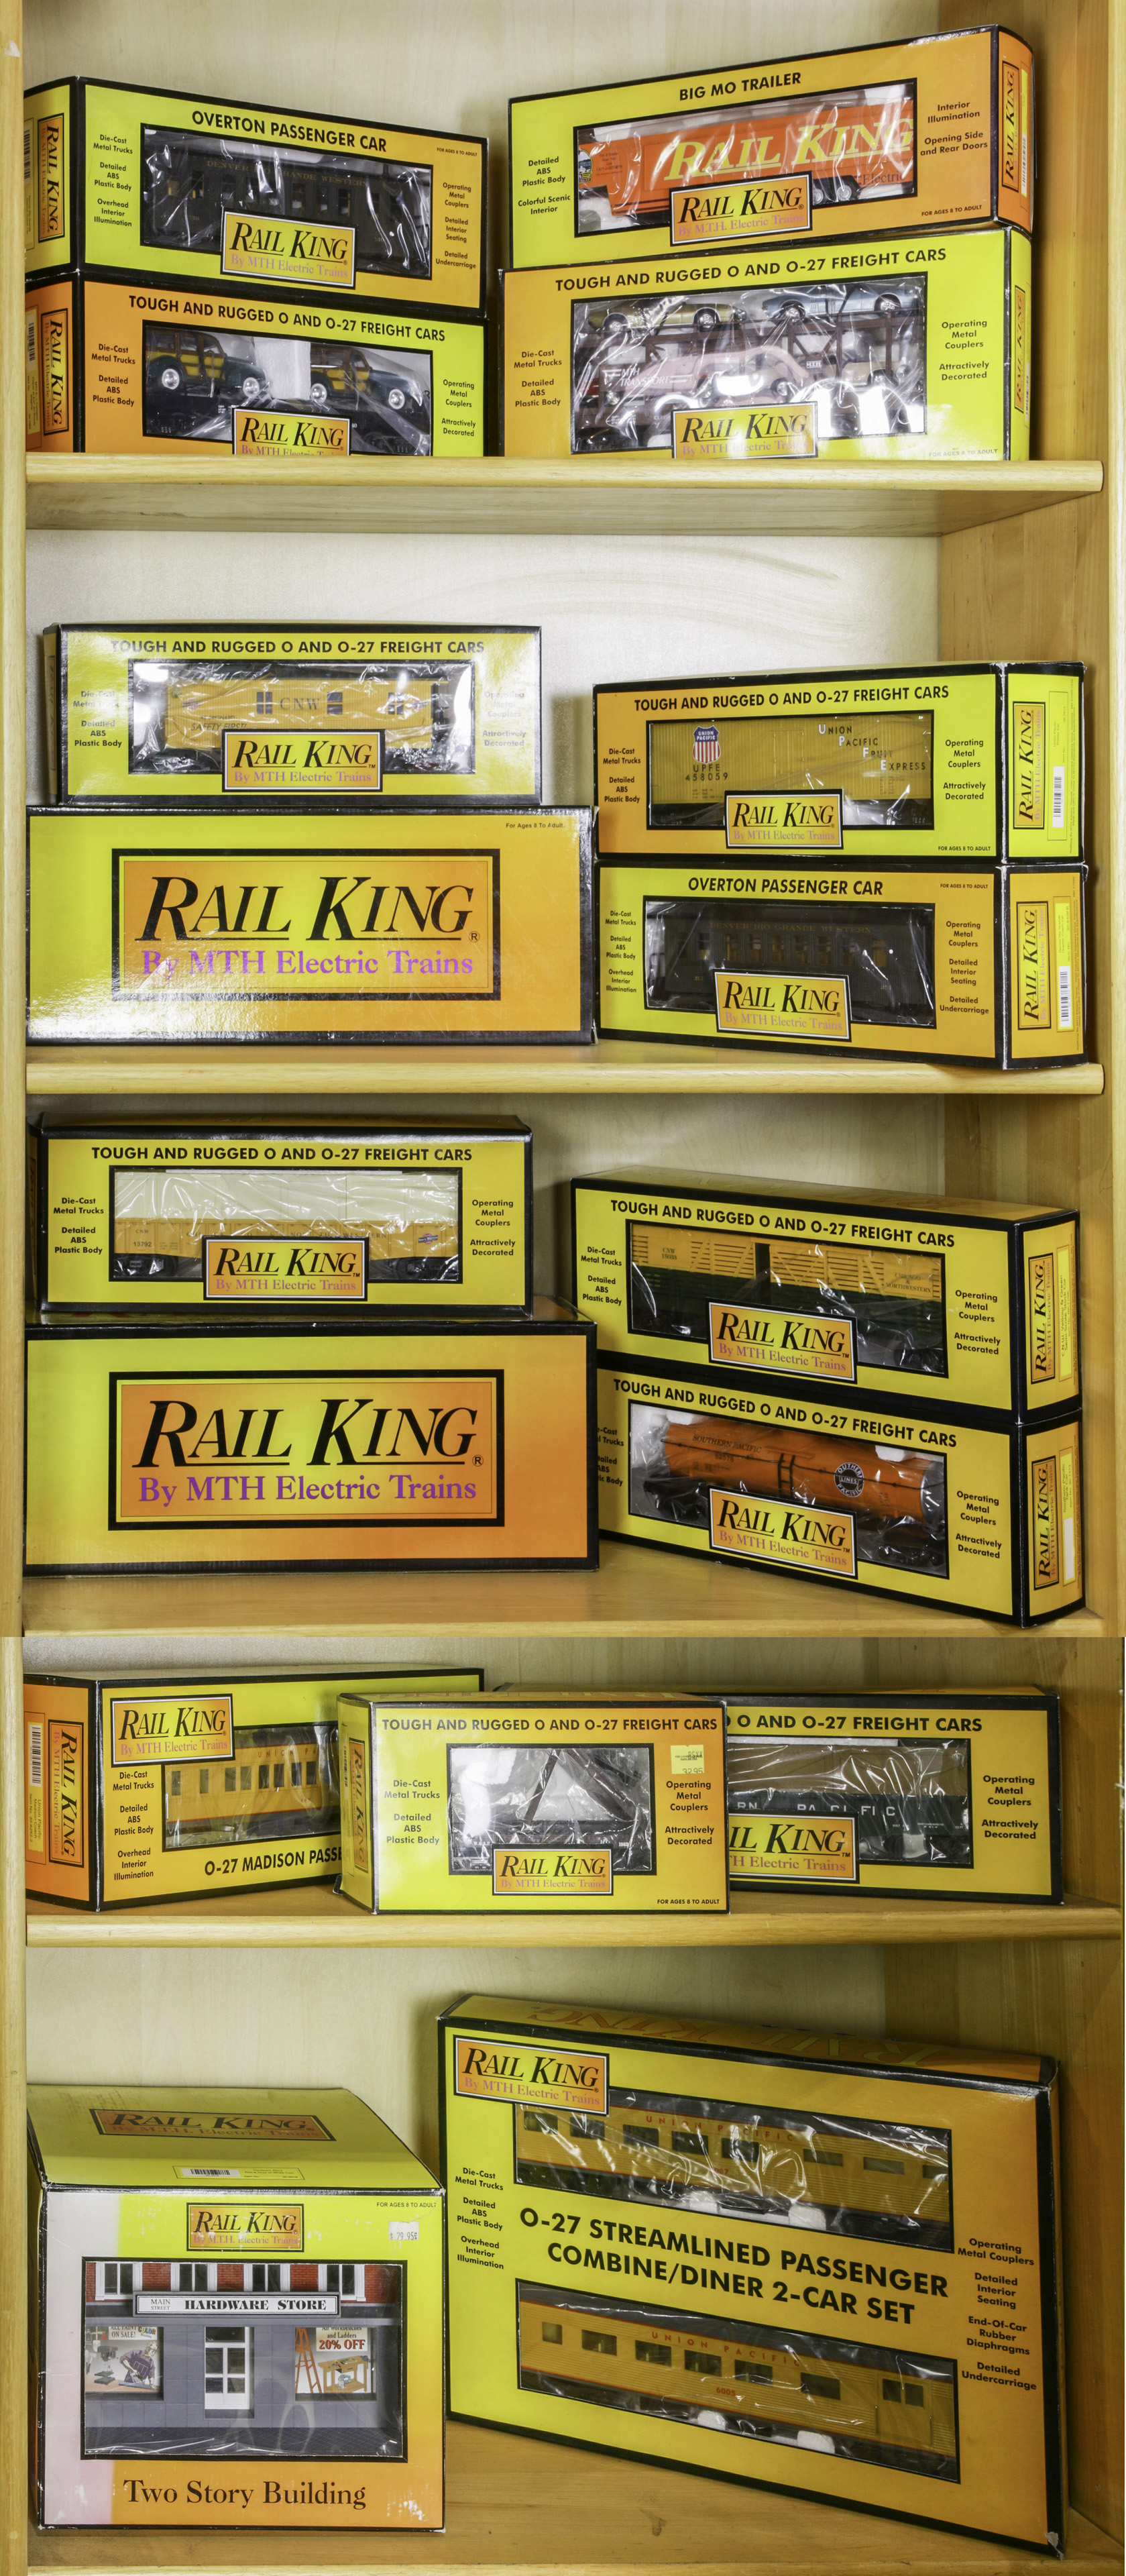 FIVE SHELVES OF BOXED RAIL KING